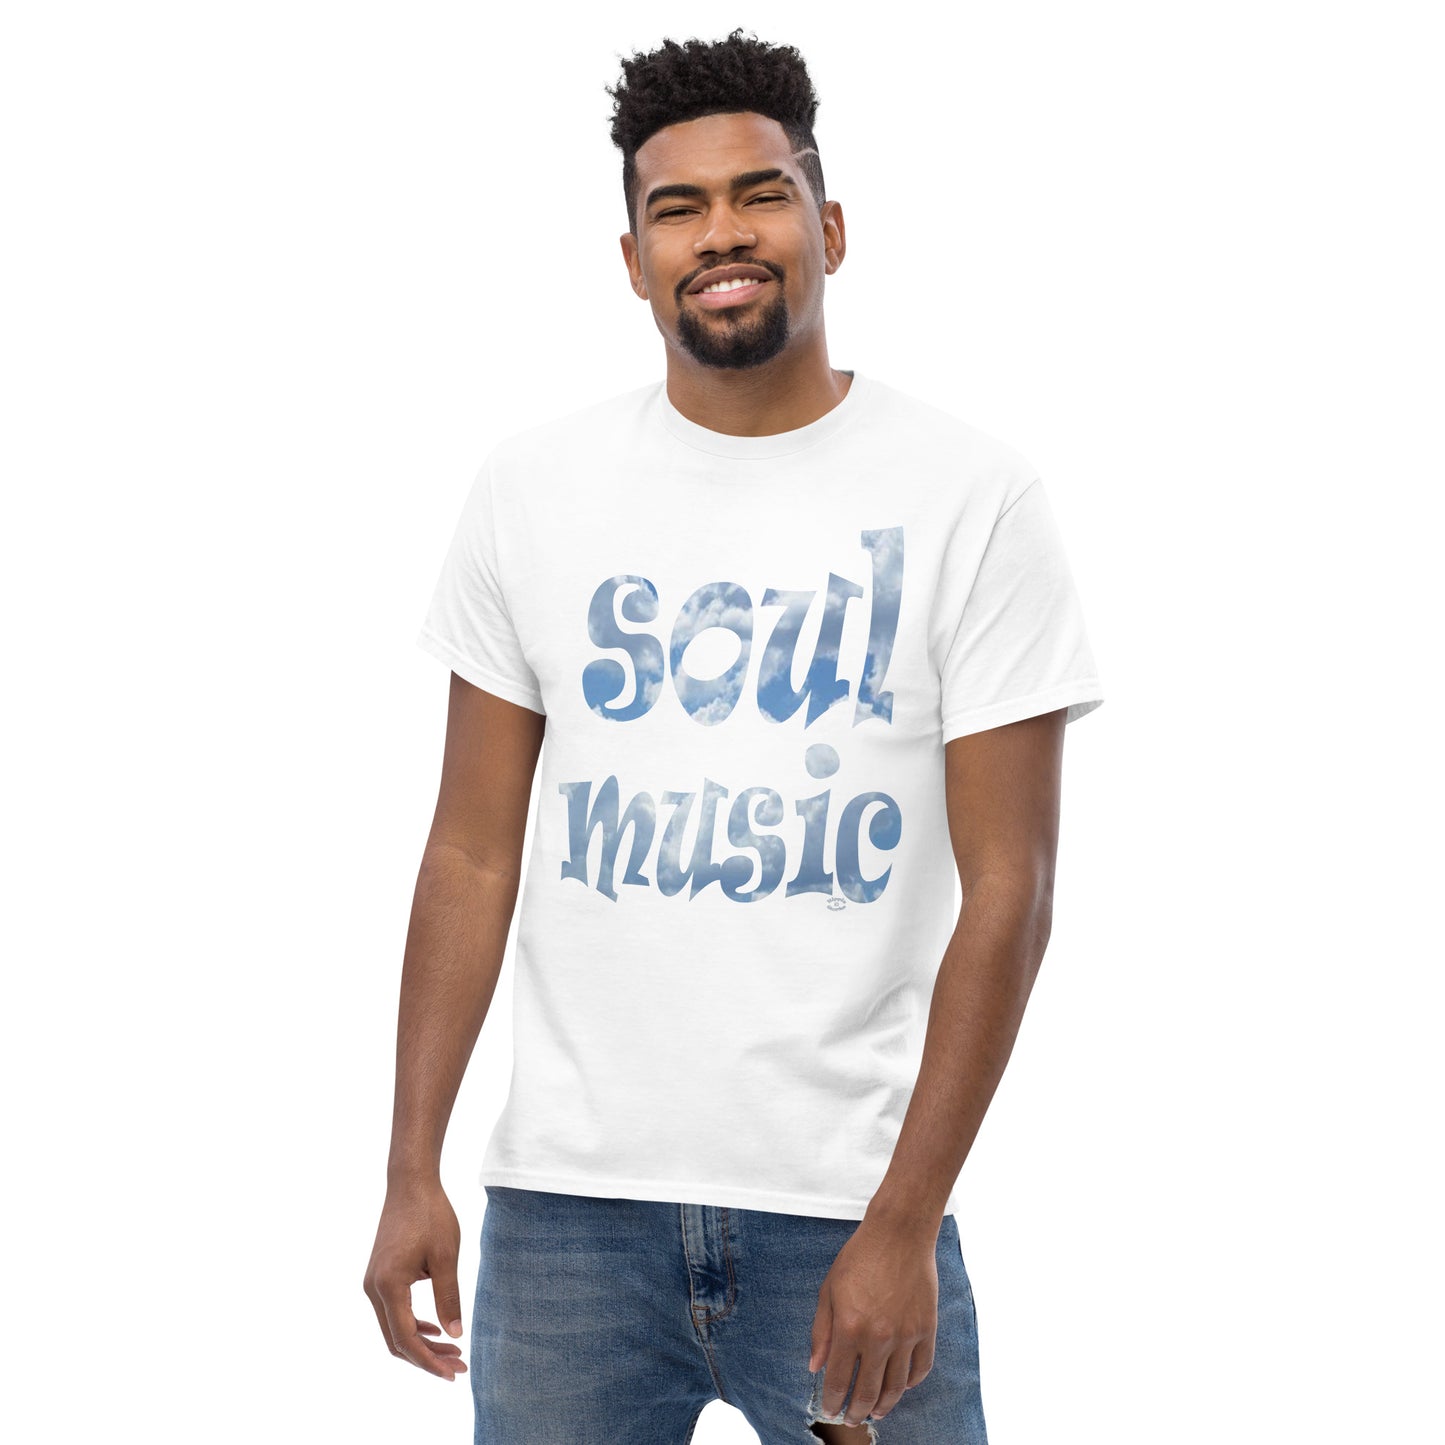 "Soul Music" Men's Classic Tee